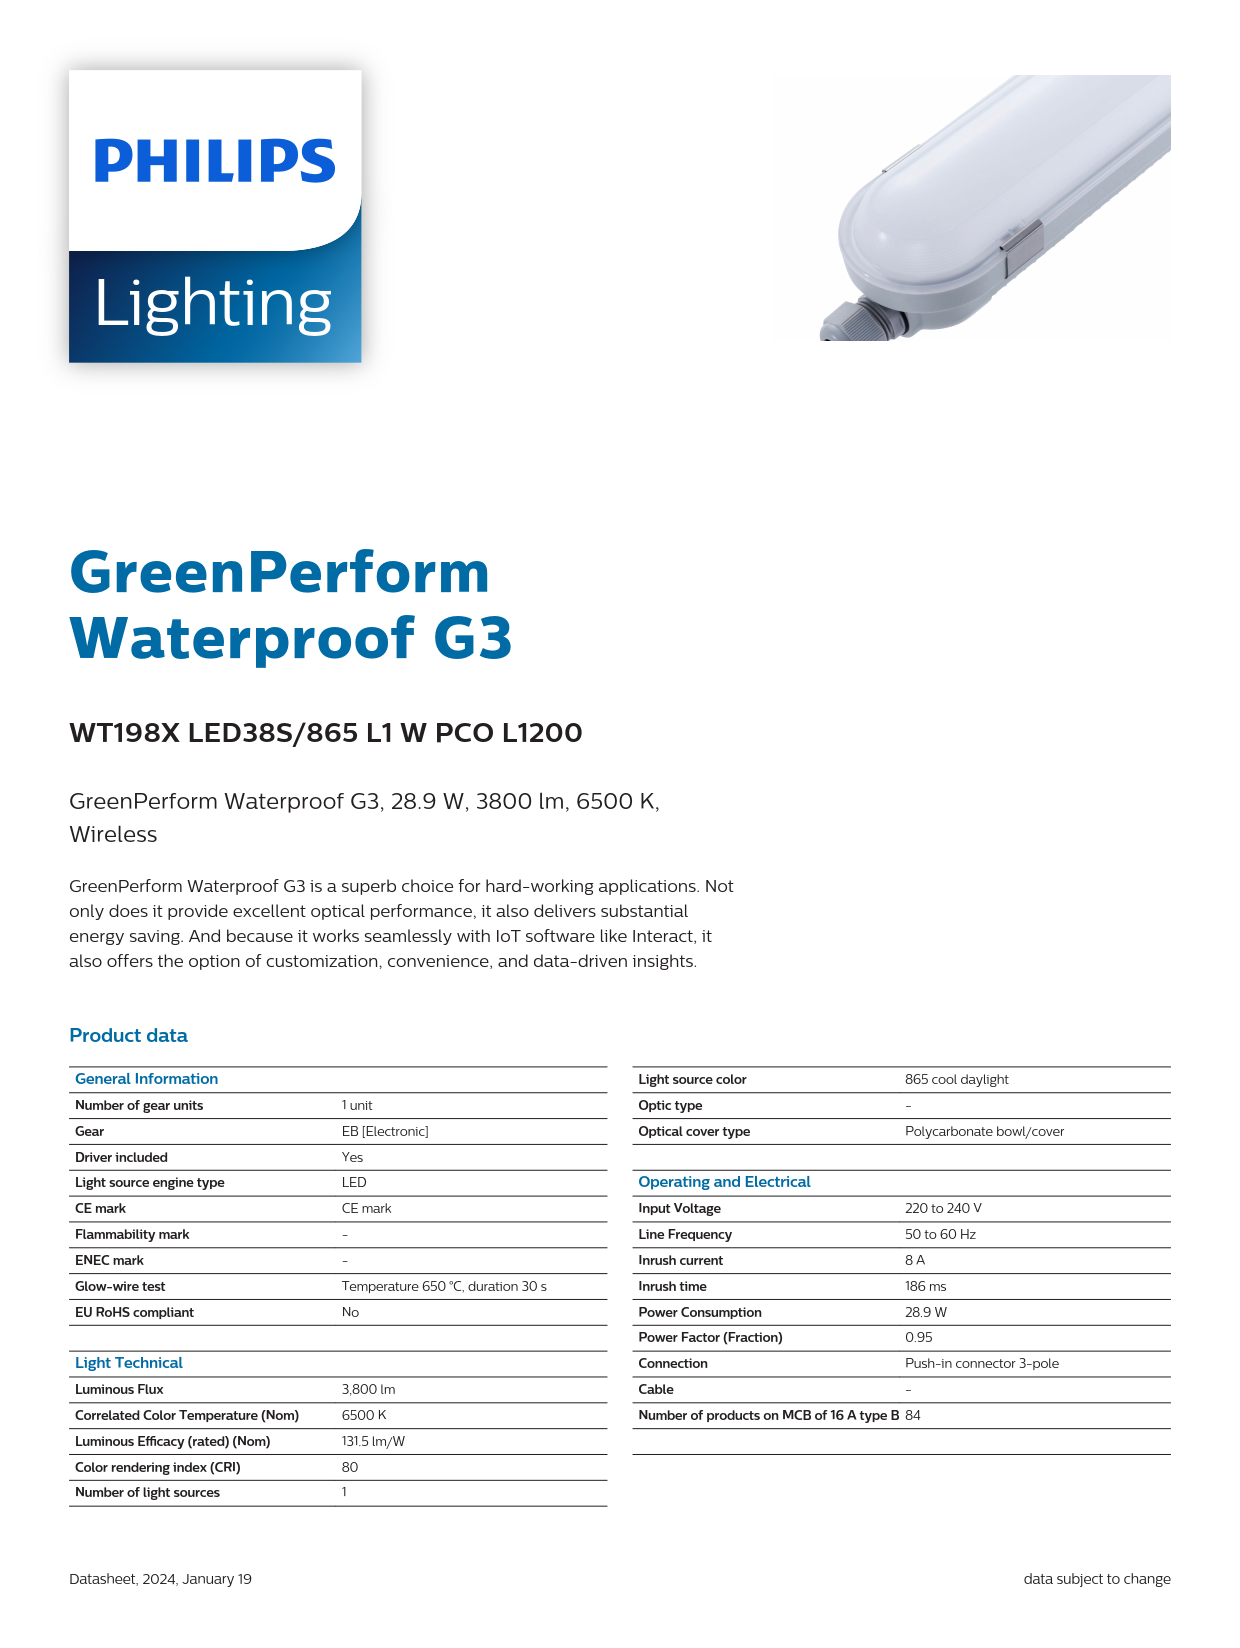 PHILIPS Waterproof Fixture light WT198X LED38S/865 L1 W PCO L1200 911401553202